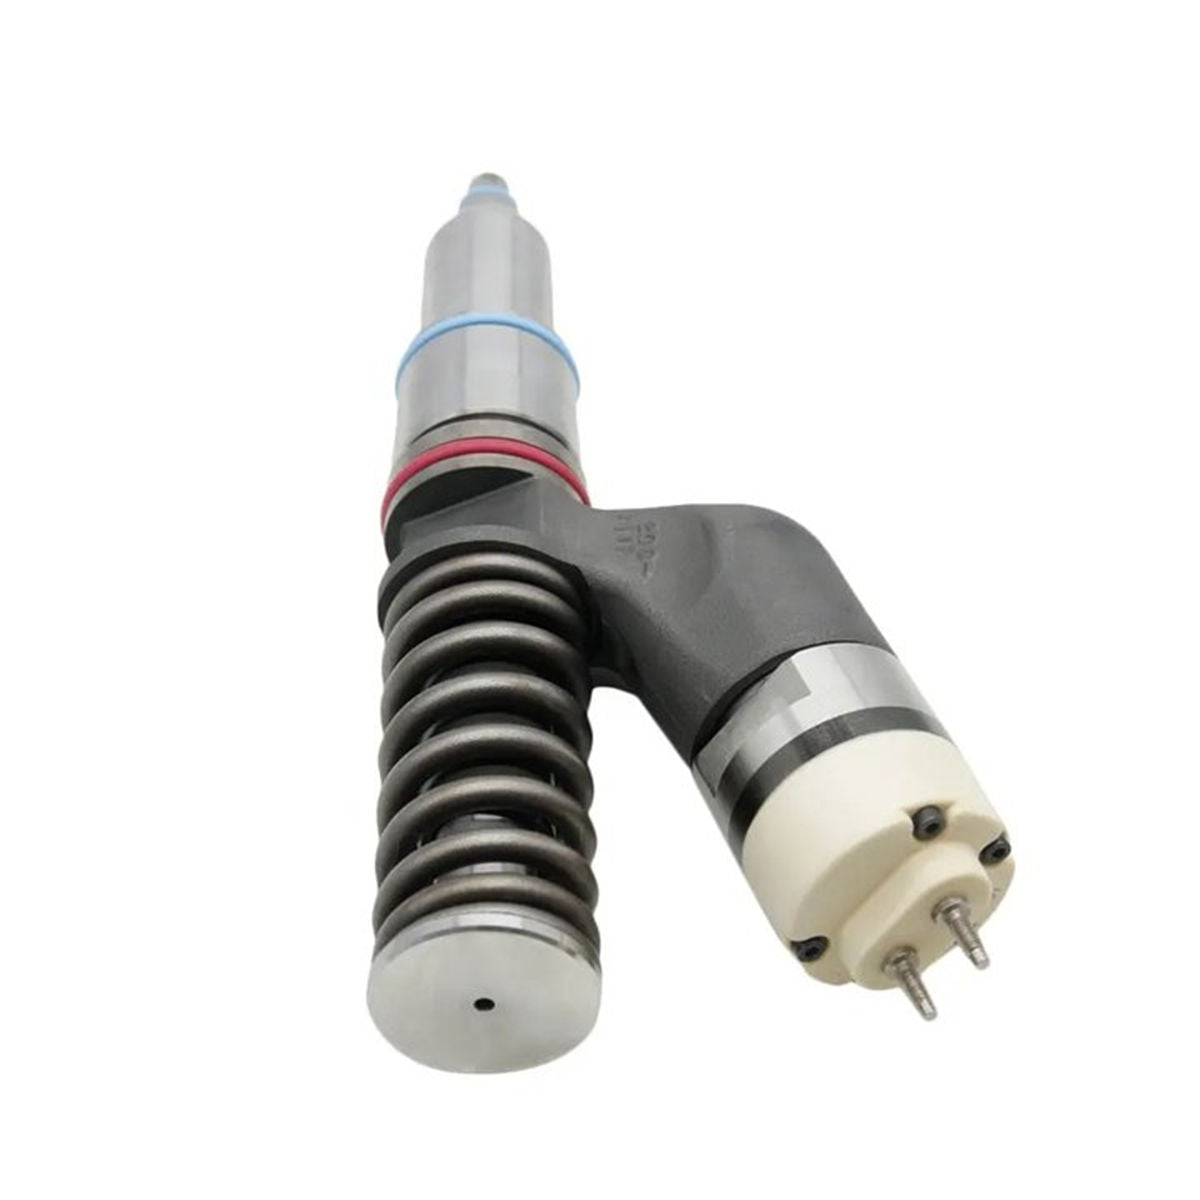 191-3004 0R-9258 Fuel Injector for Caterpillar 3406E 3456Diesel Engine - Sinocmp